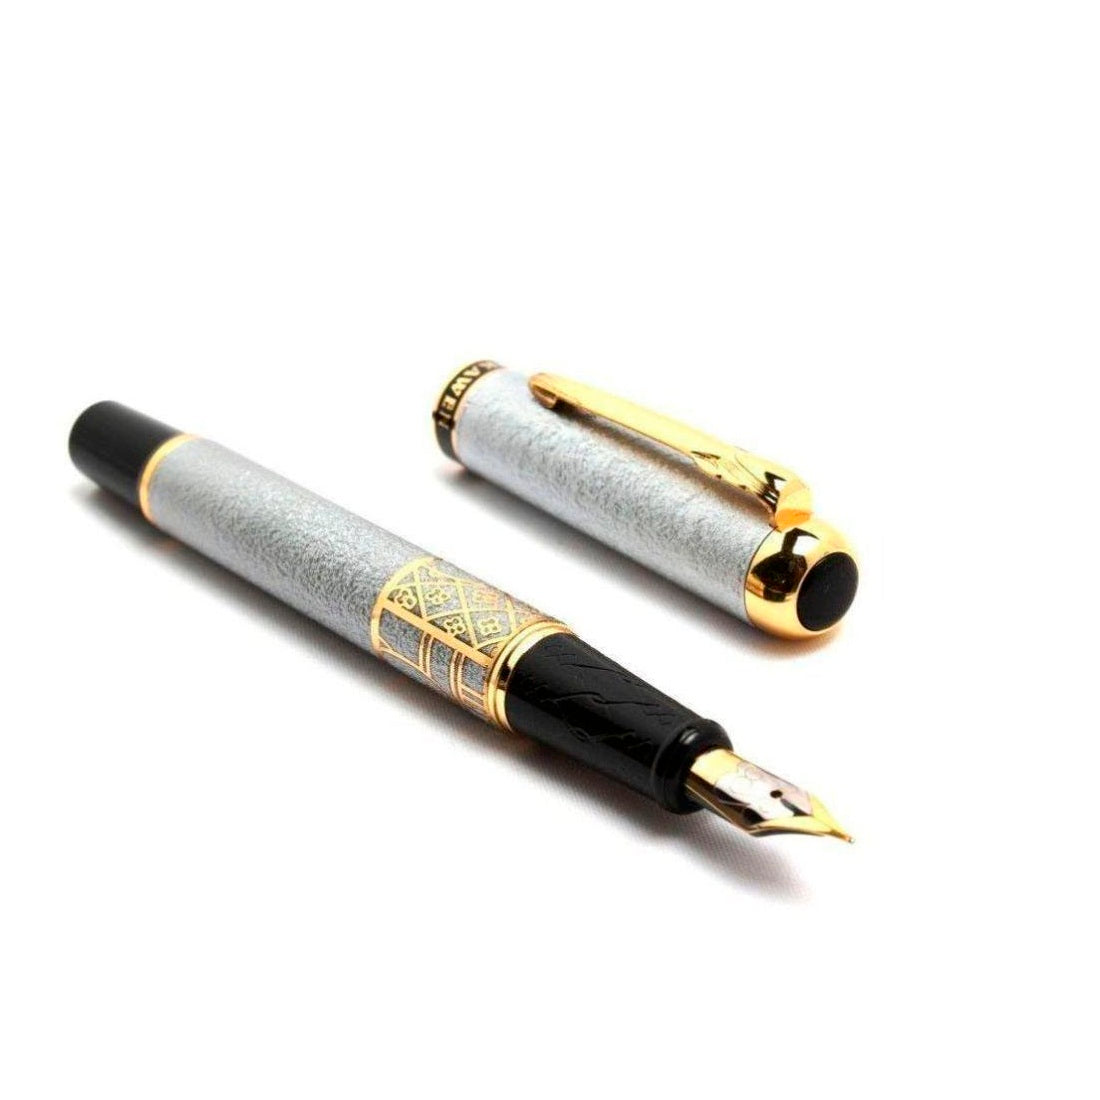 Hayman Dikawen 24 CT Gold Plated Fountain Pen With Box (P-91) - Hayman Pen 